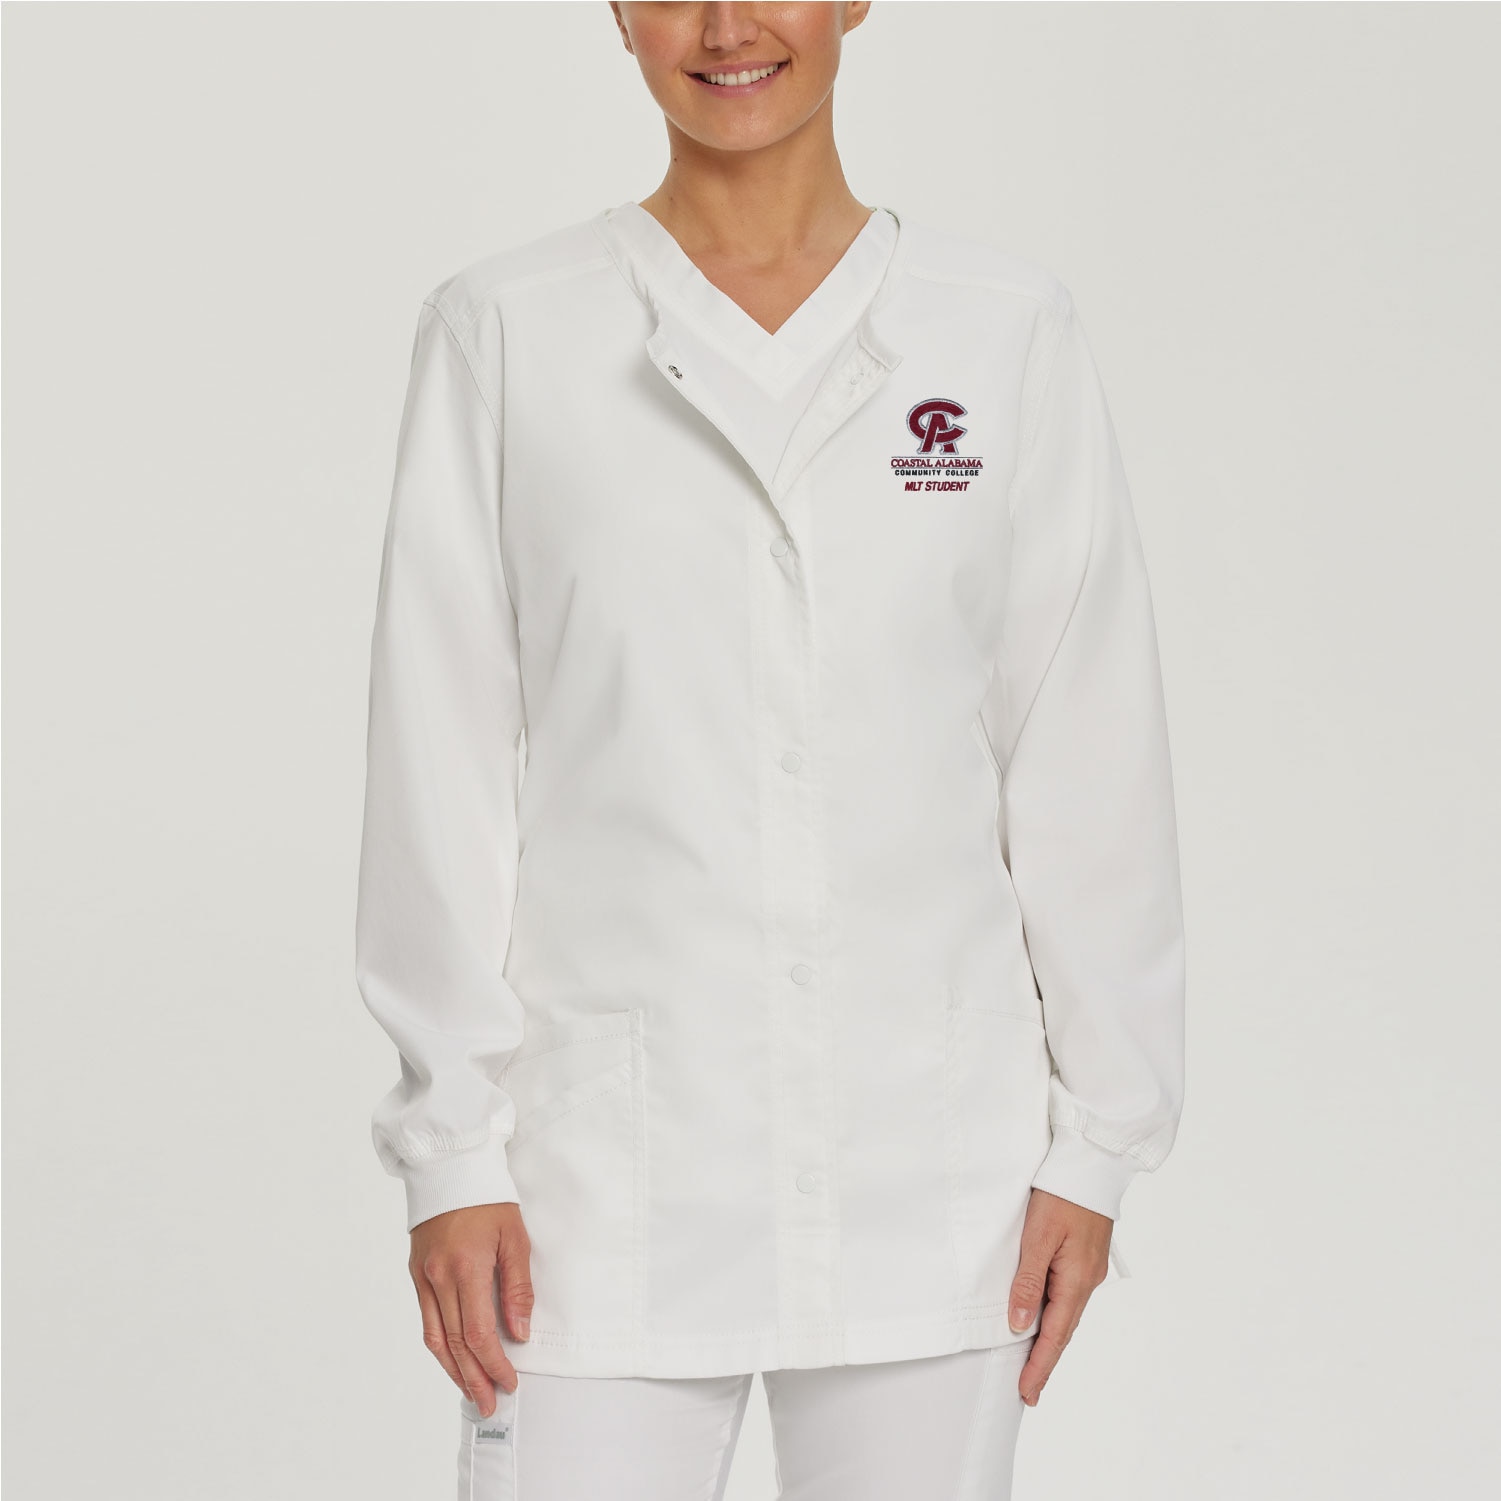 Women's Lab Tech White Warm-up Coat